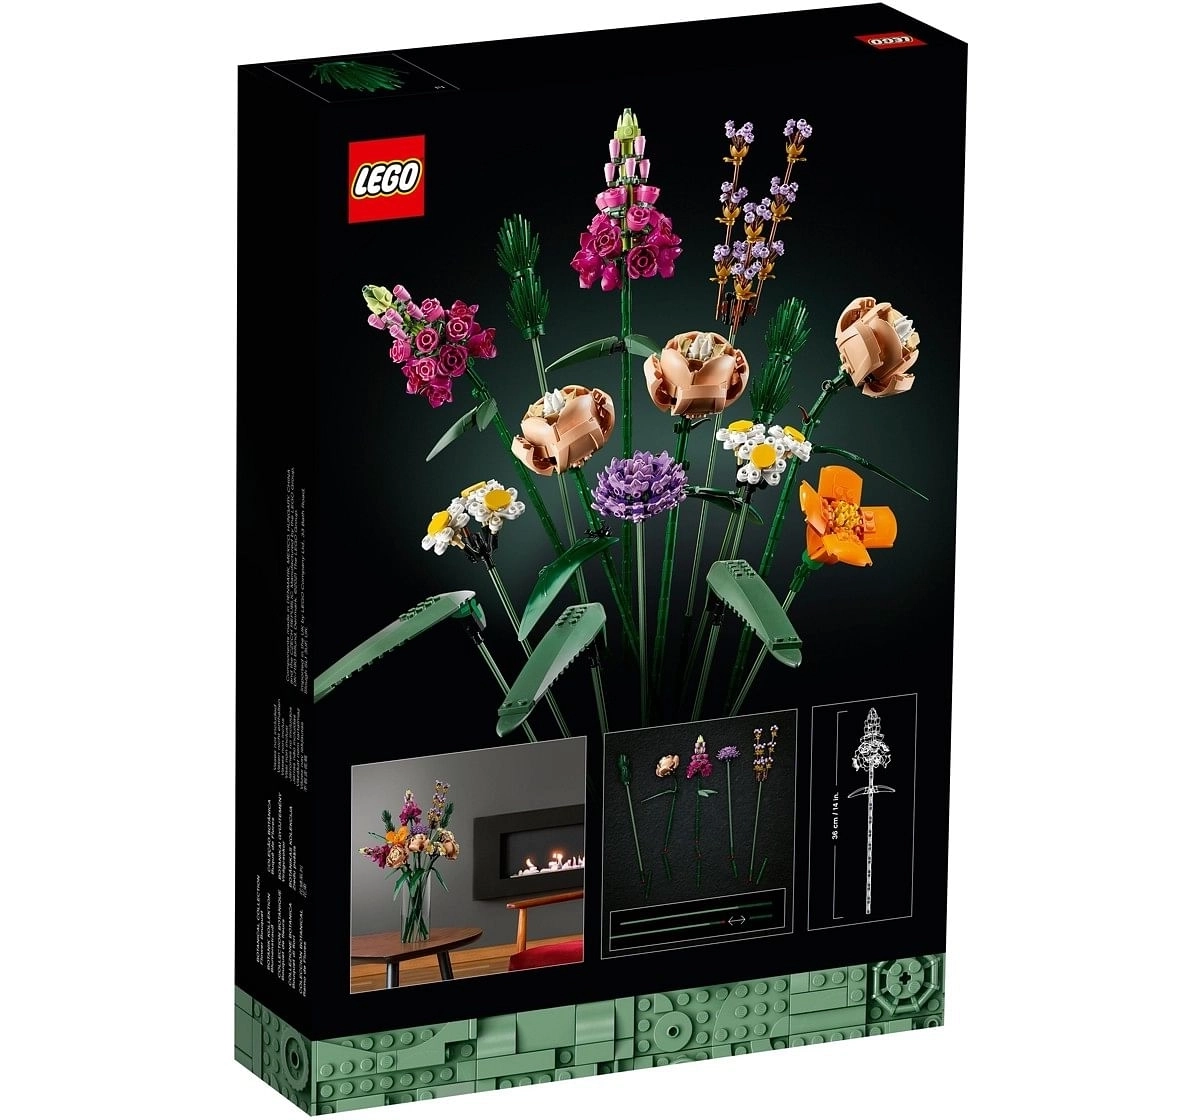  LEGO® Icons Flower Bouquet 10280 Building Kit; A